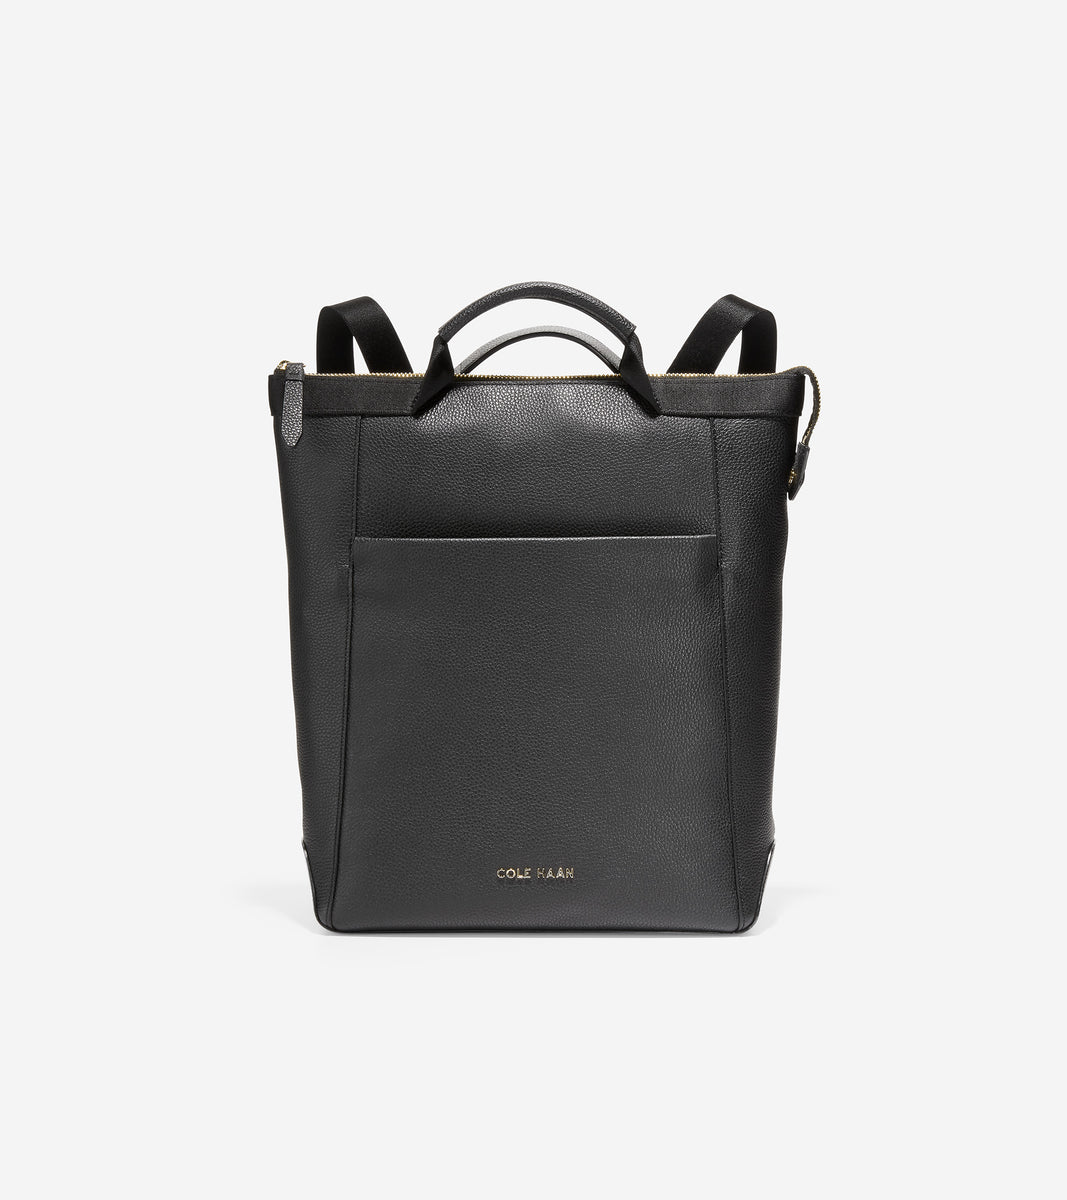 u06144-Grand Ambition Small Convertible Backpack-Black